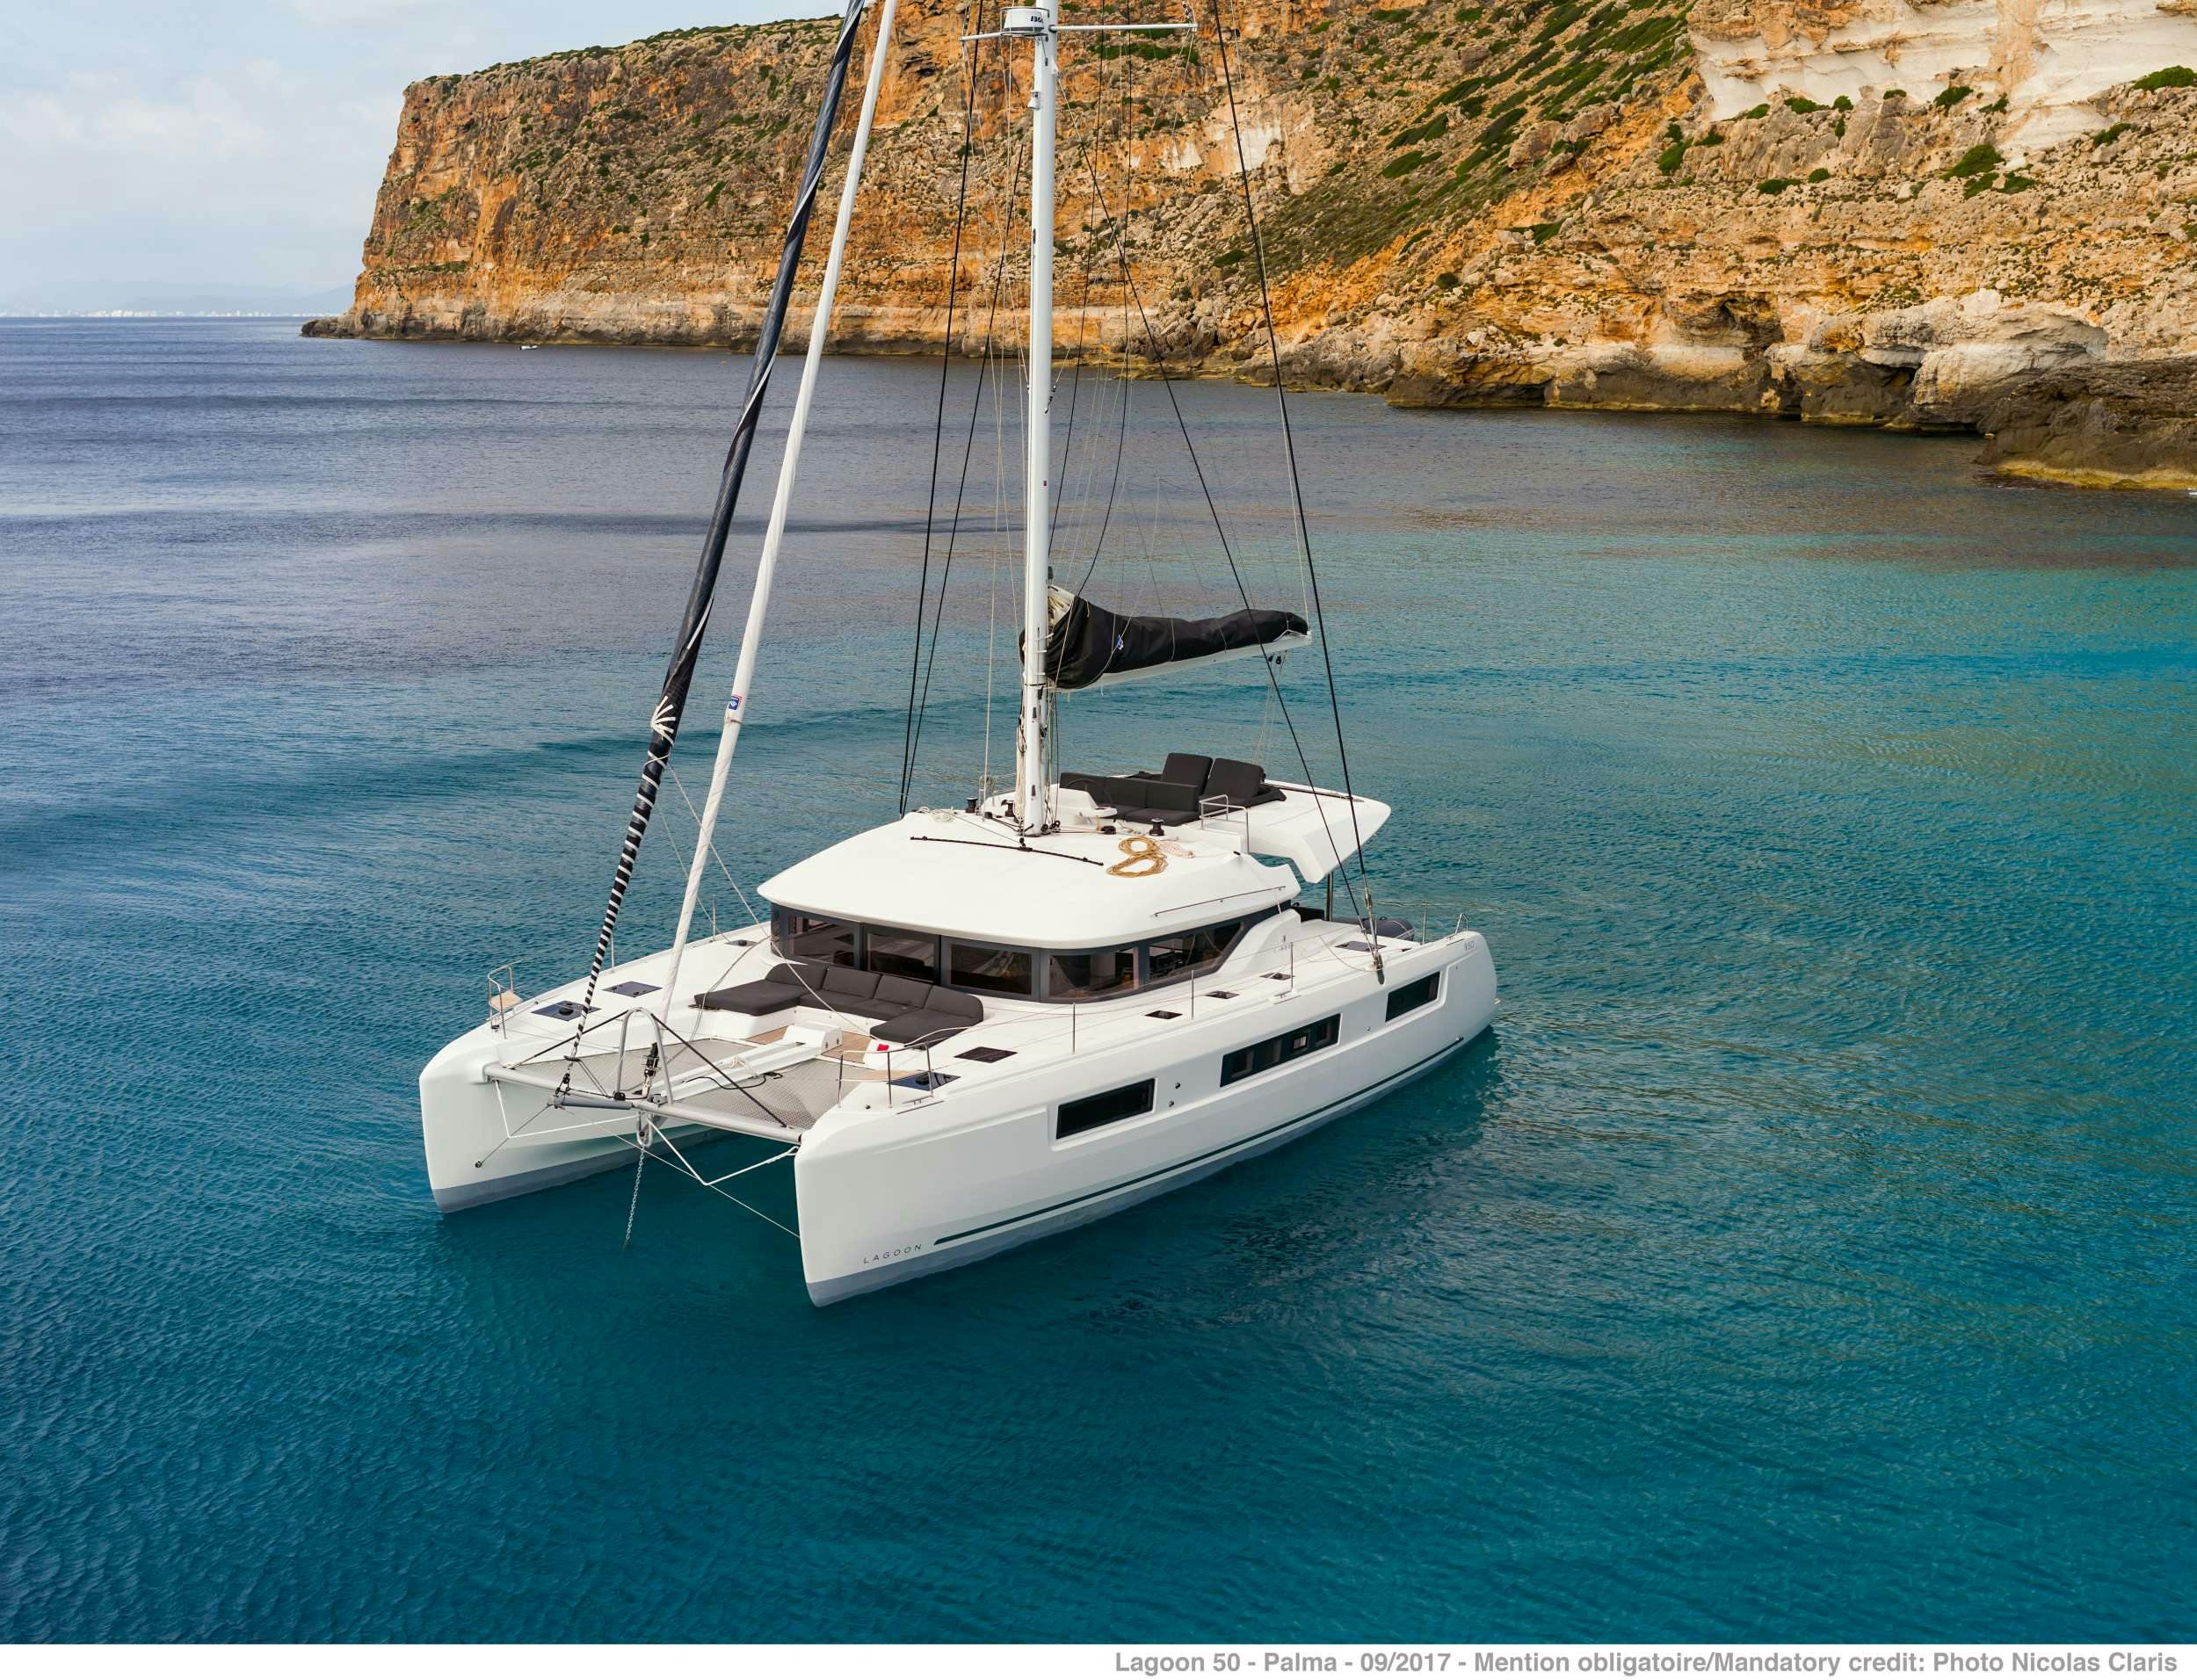 ONEIDA 2 - Yacht Charter Abaco Islands & Boat hire in Greece 1